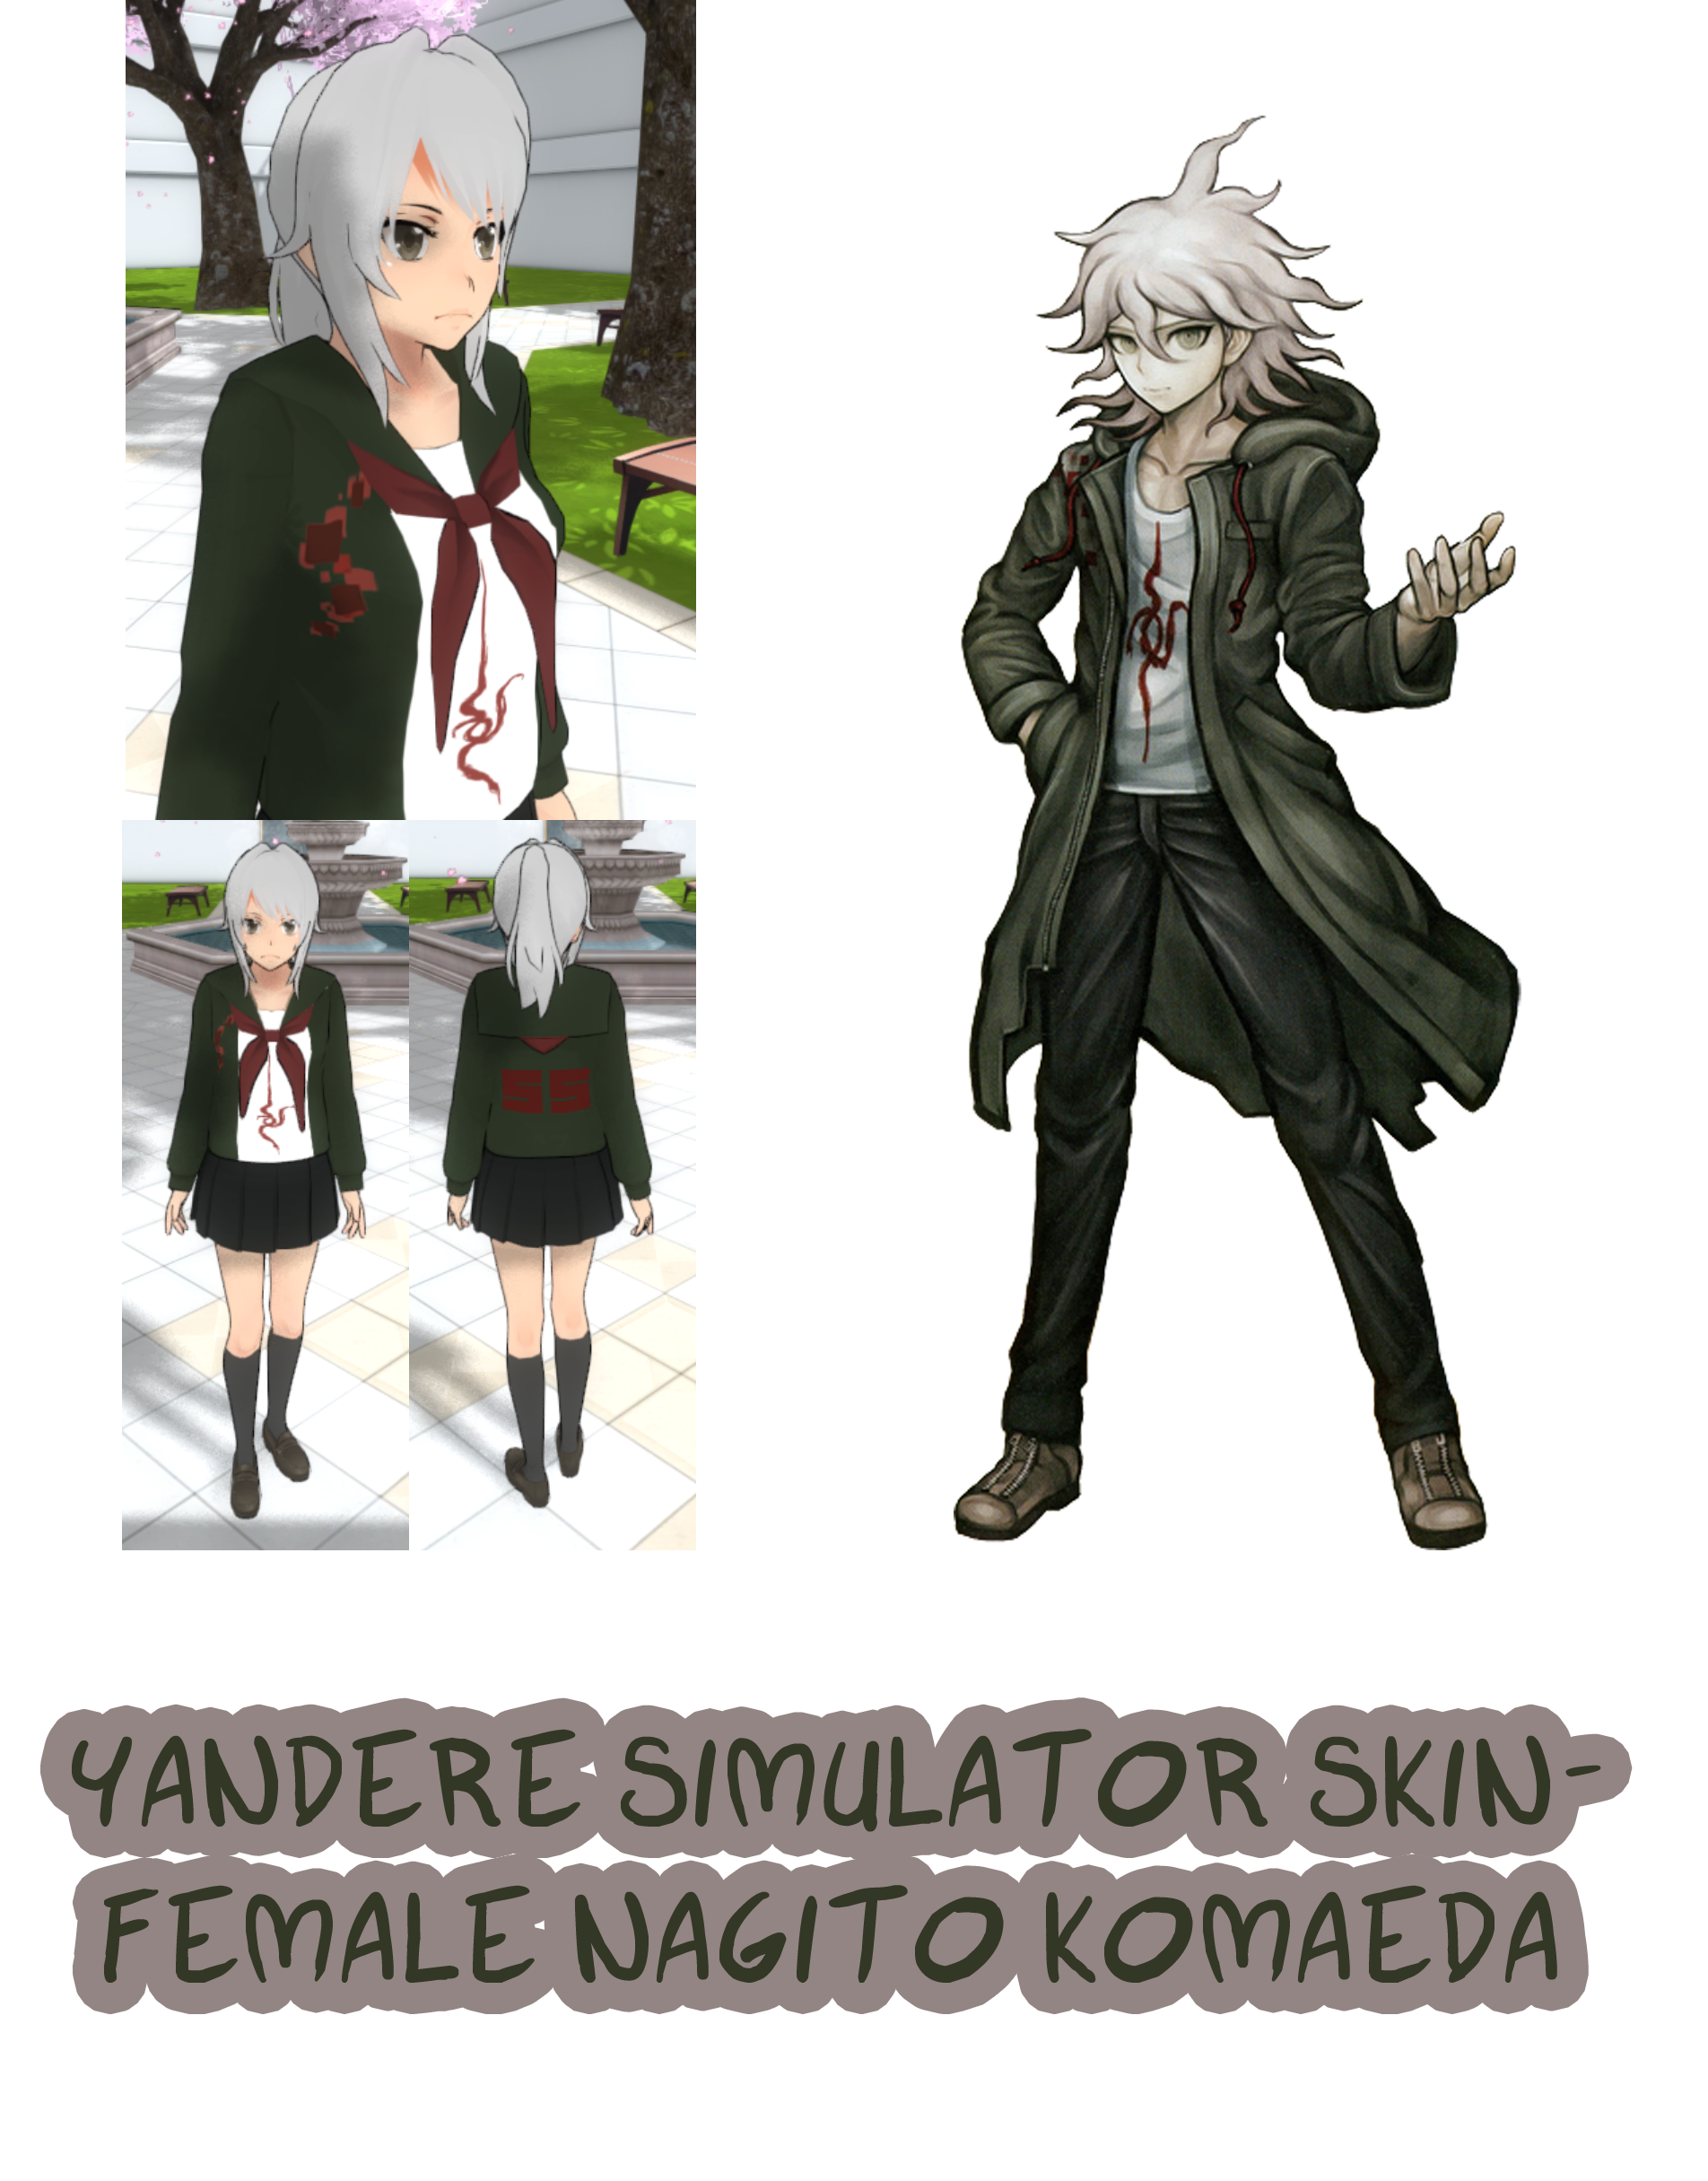 Yandere Simulator Female Nagito Komaeda Skin By Imaginaryalchemist On